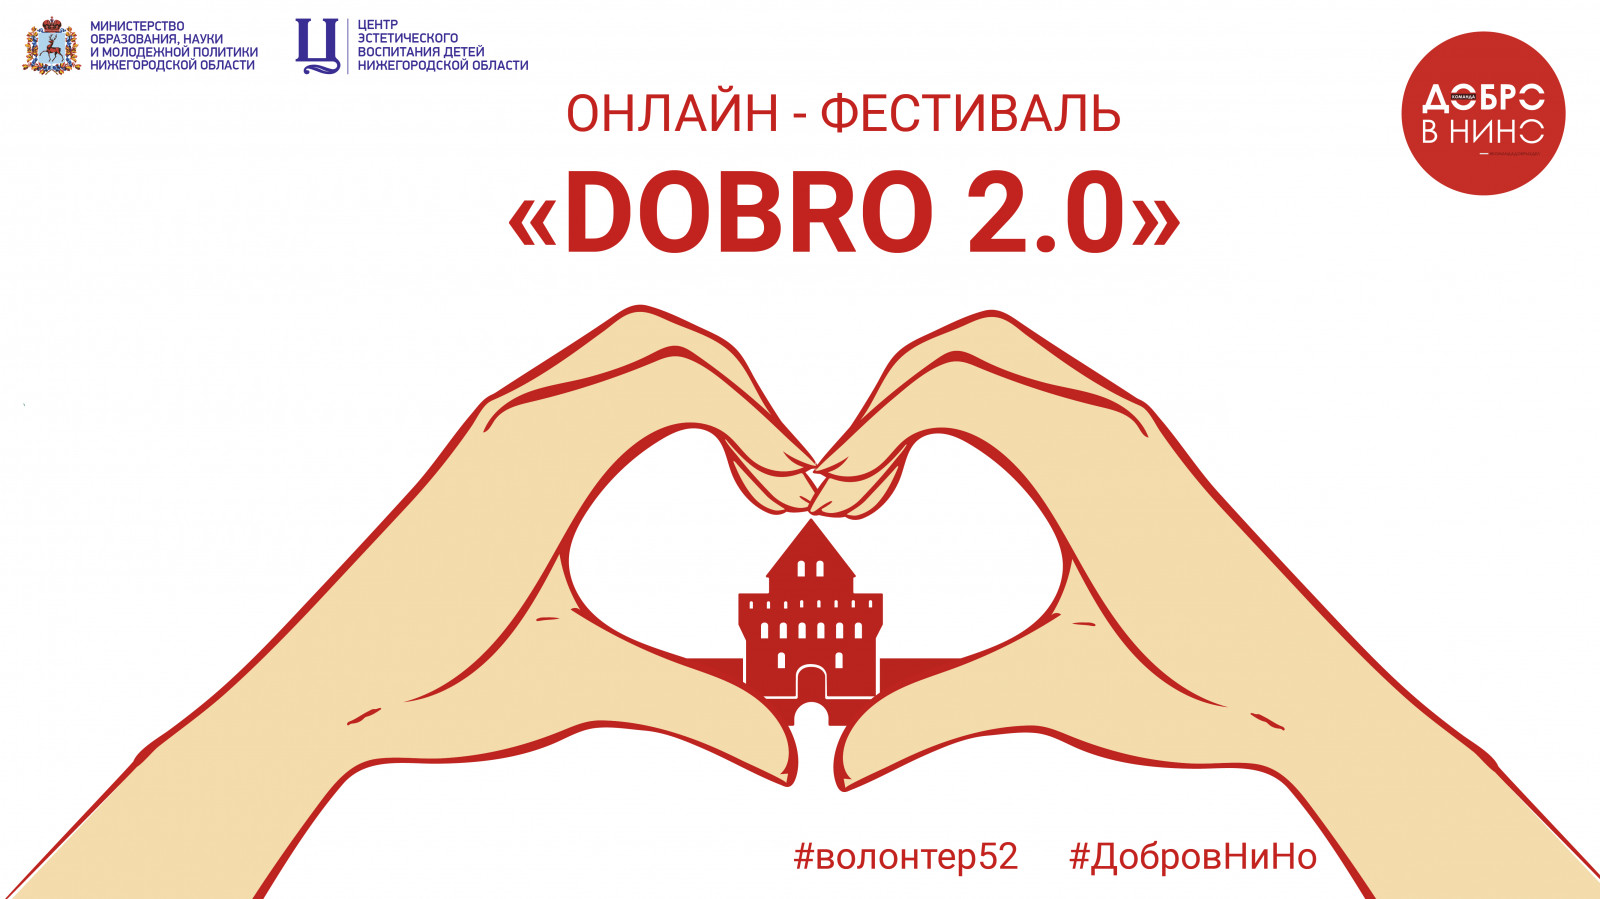 Онлайн-фестиваль «DOBRO 2.0»